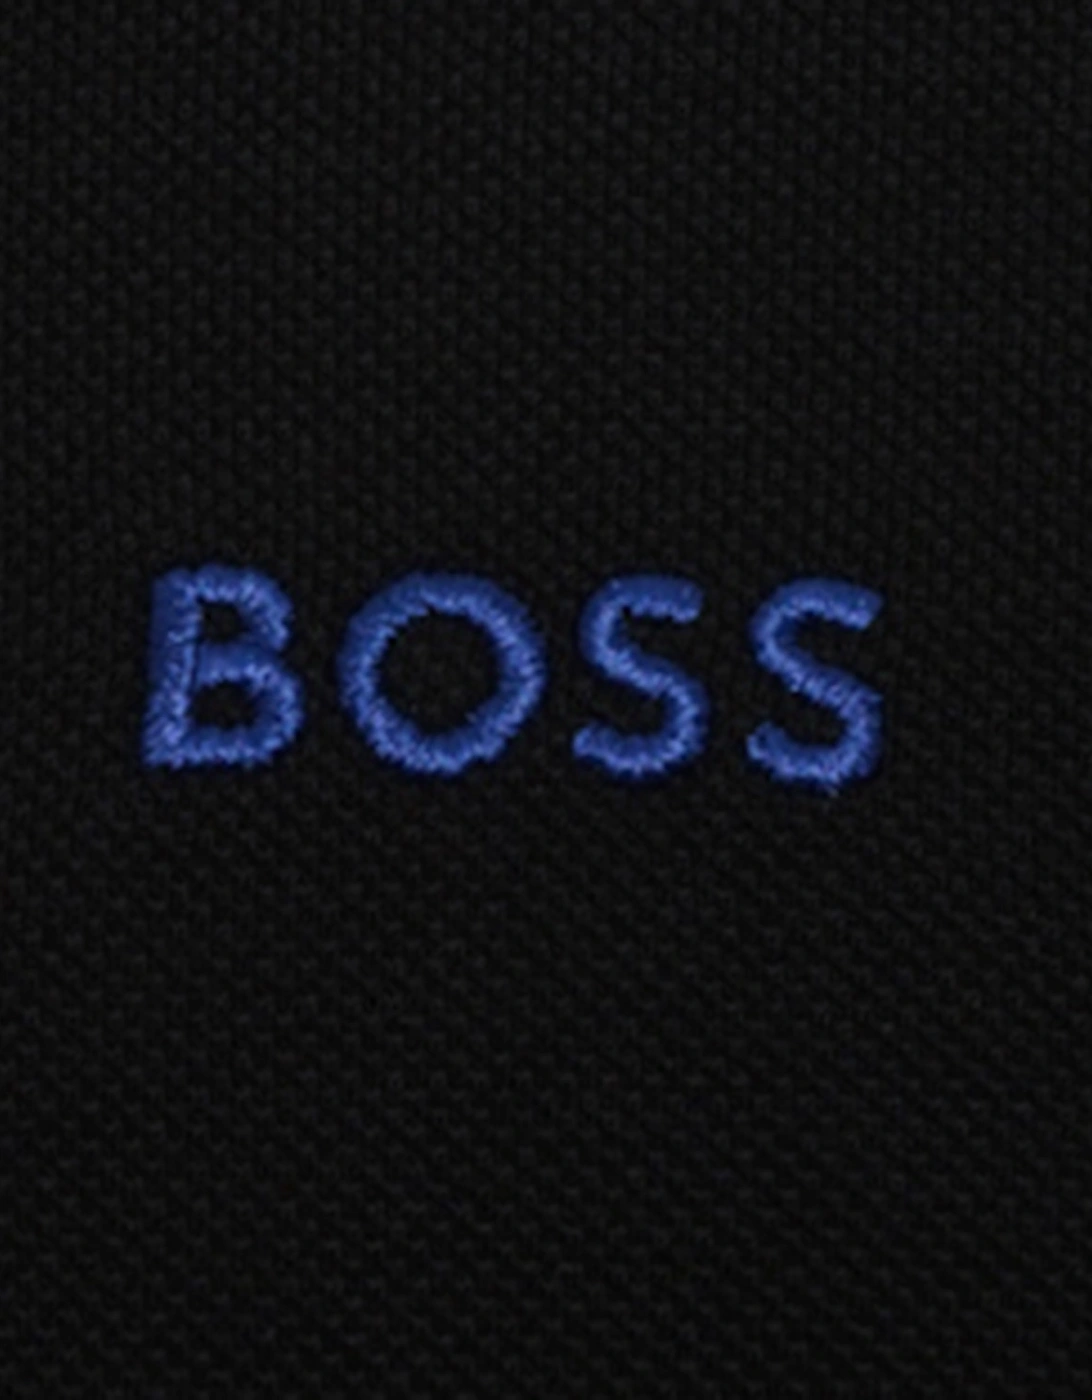 Boss Mens Paddy 1 Polo Shirt (Black)